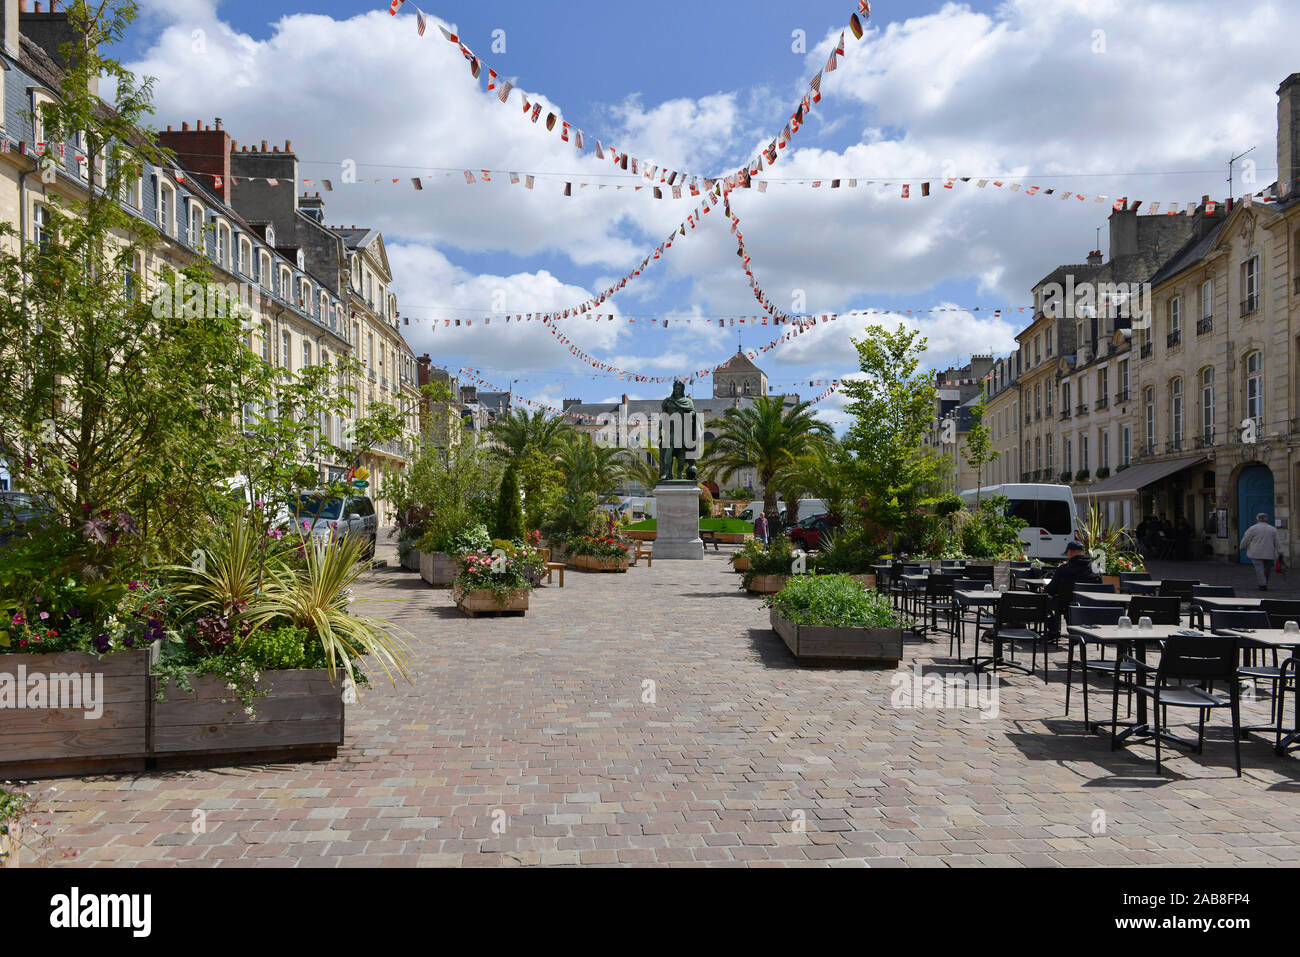 Caen (Normandy, north-western France): 